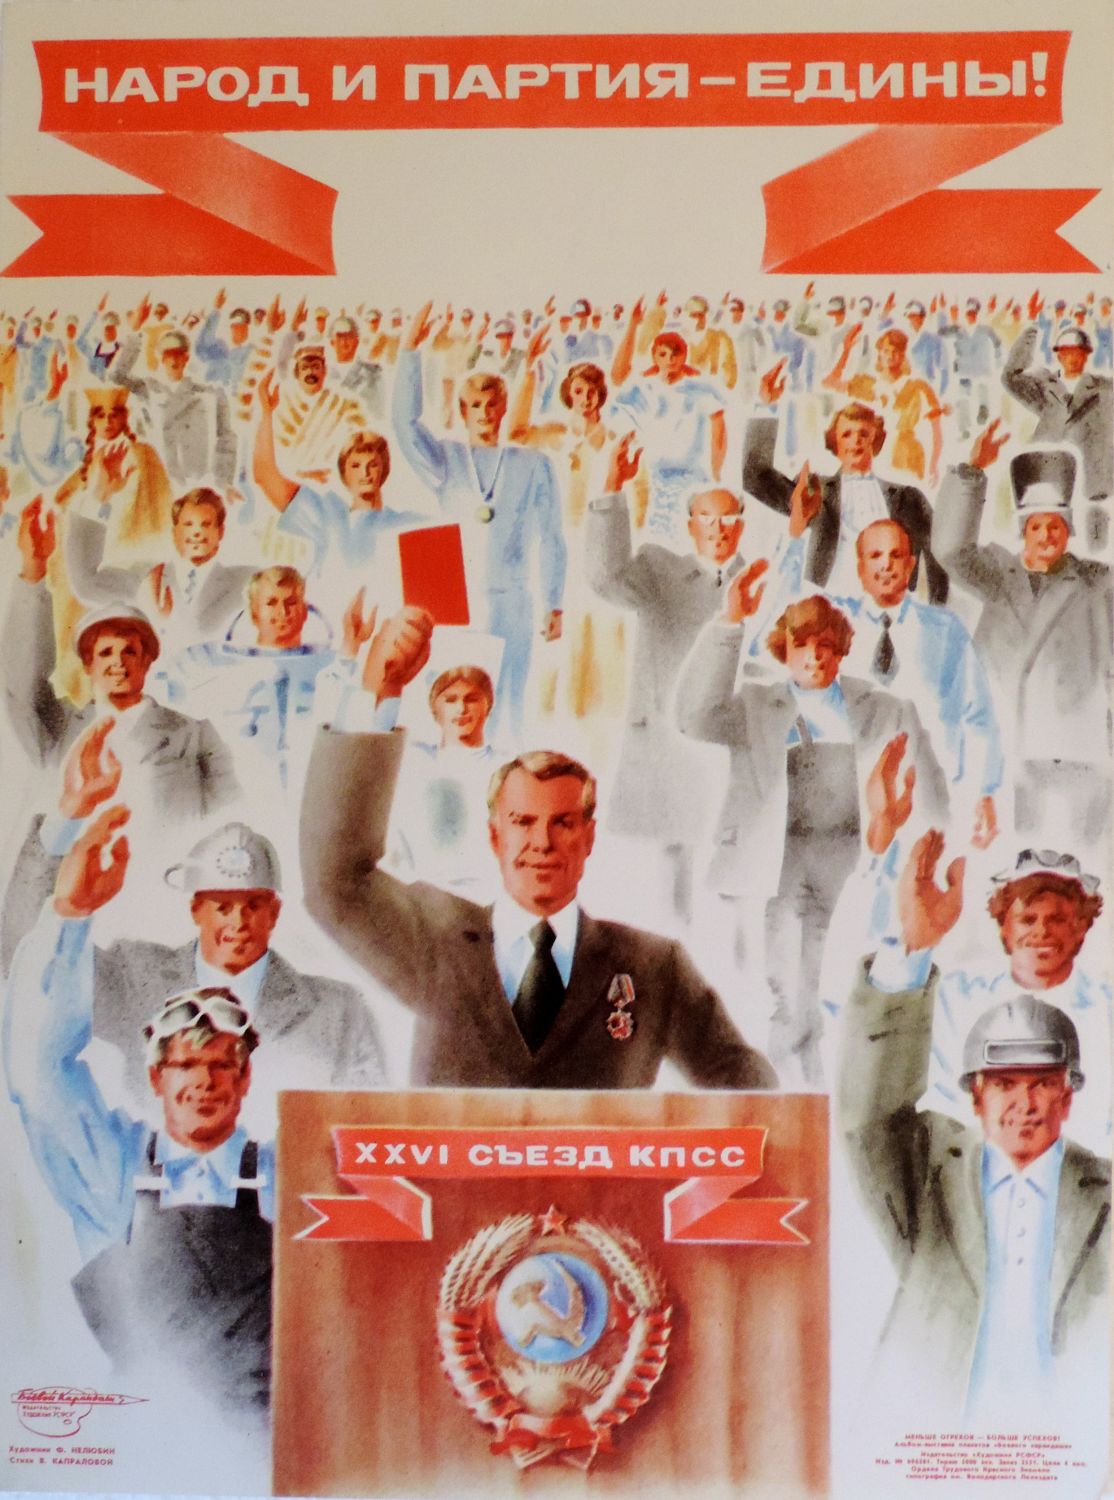 Народ и партия едины. Плакаты СССР народ и партия едины. Плакаты партий. Советские плакаты про партию. Партия народ.